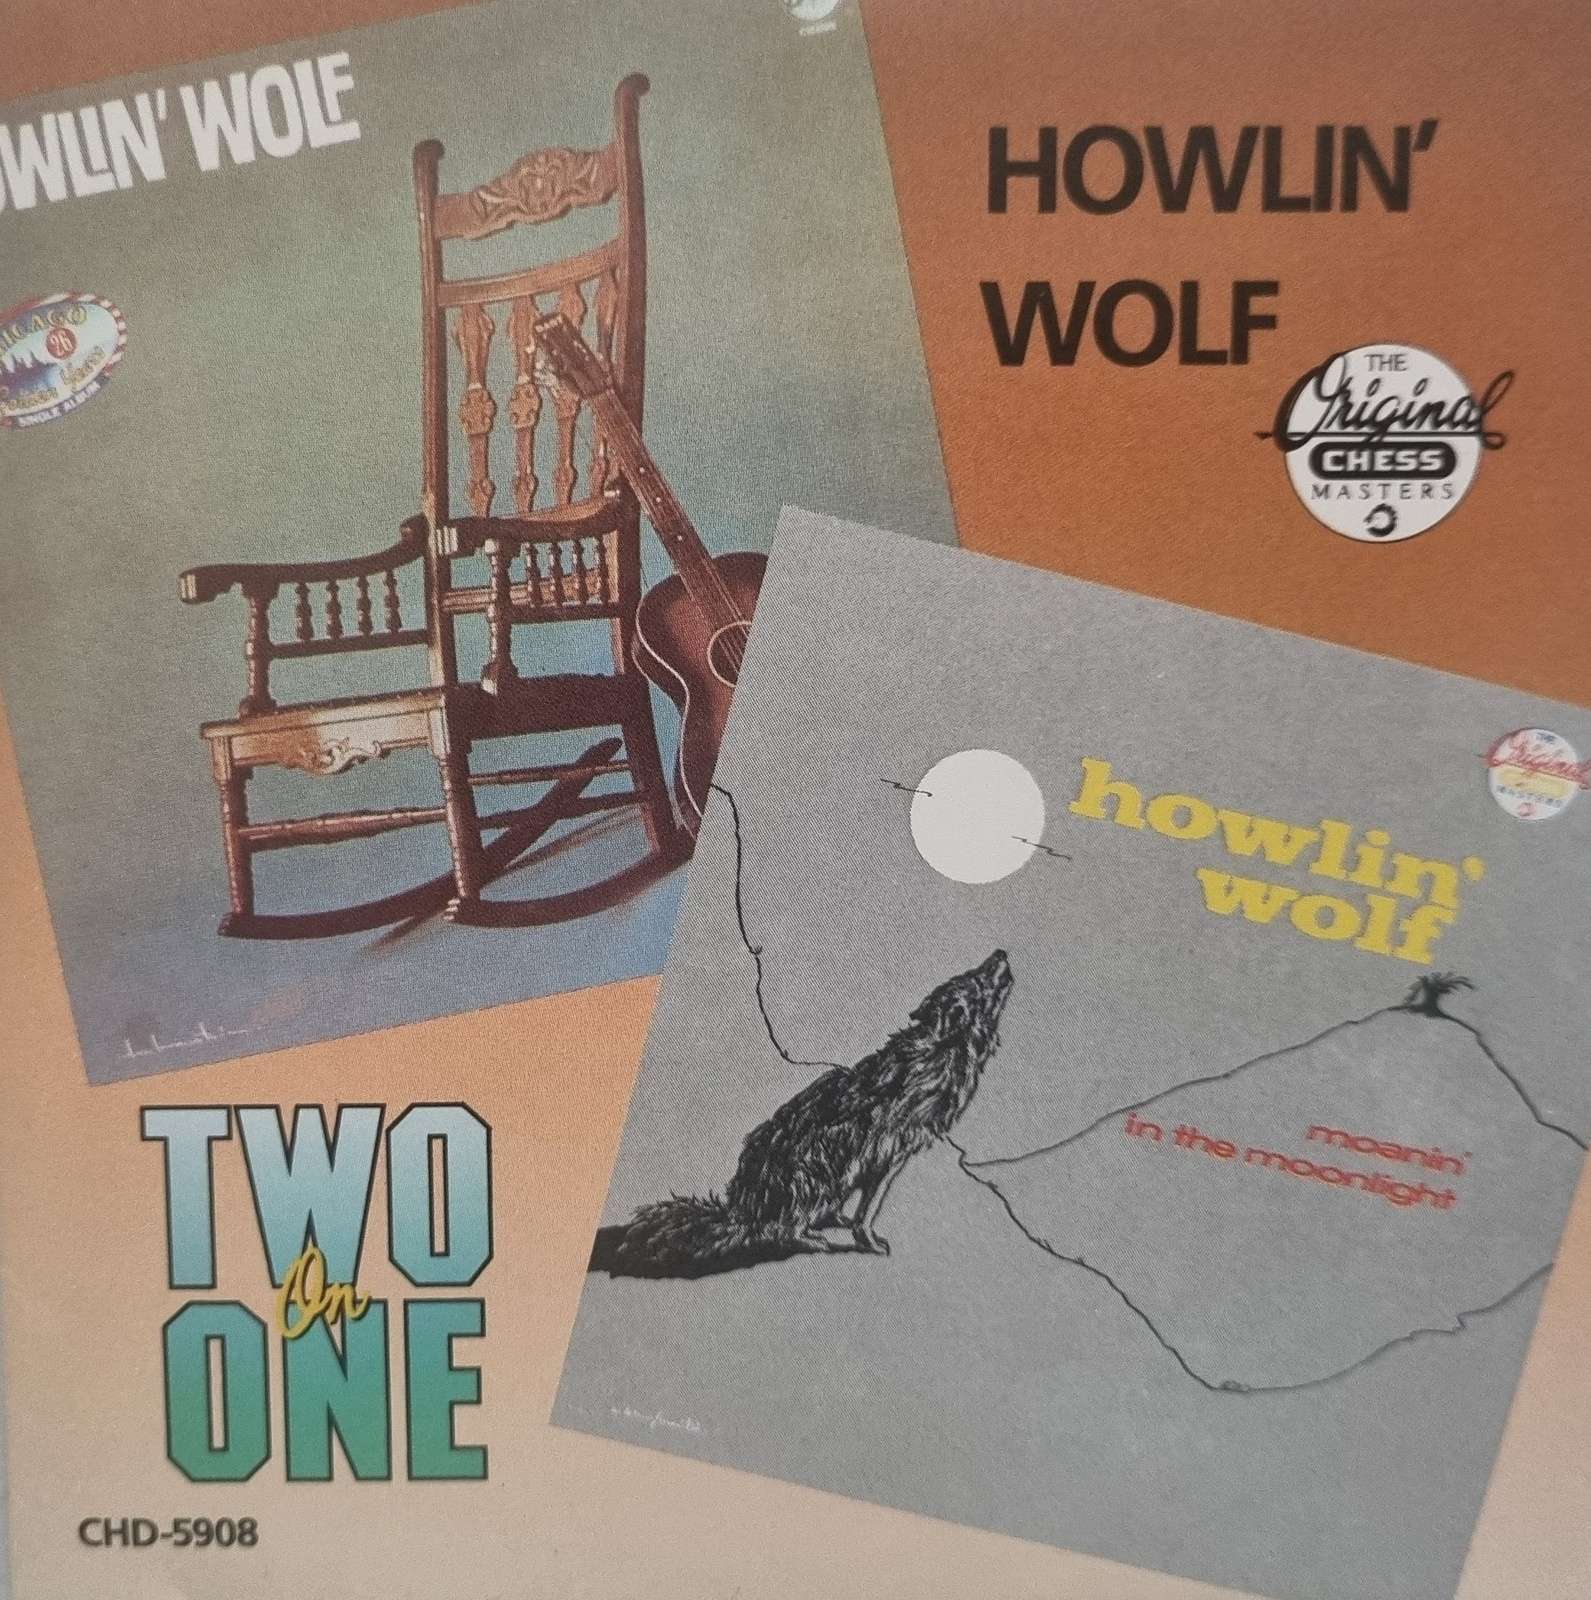 Howlin' Wolf - Moanin' in the Moonlight CD